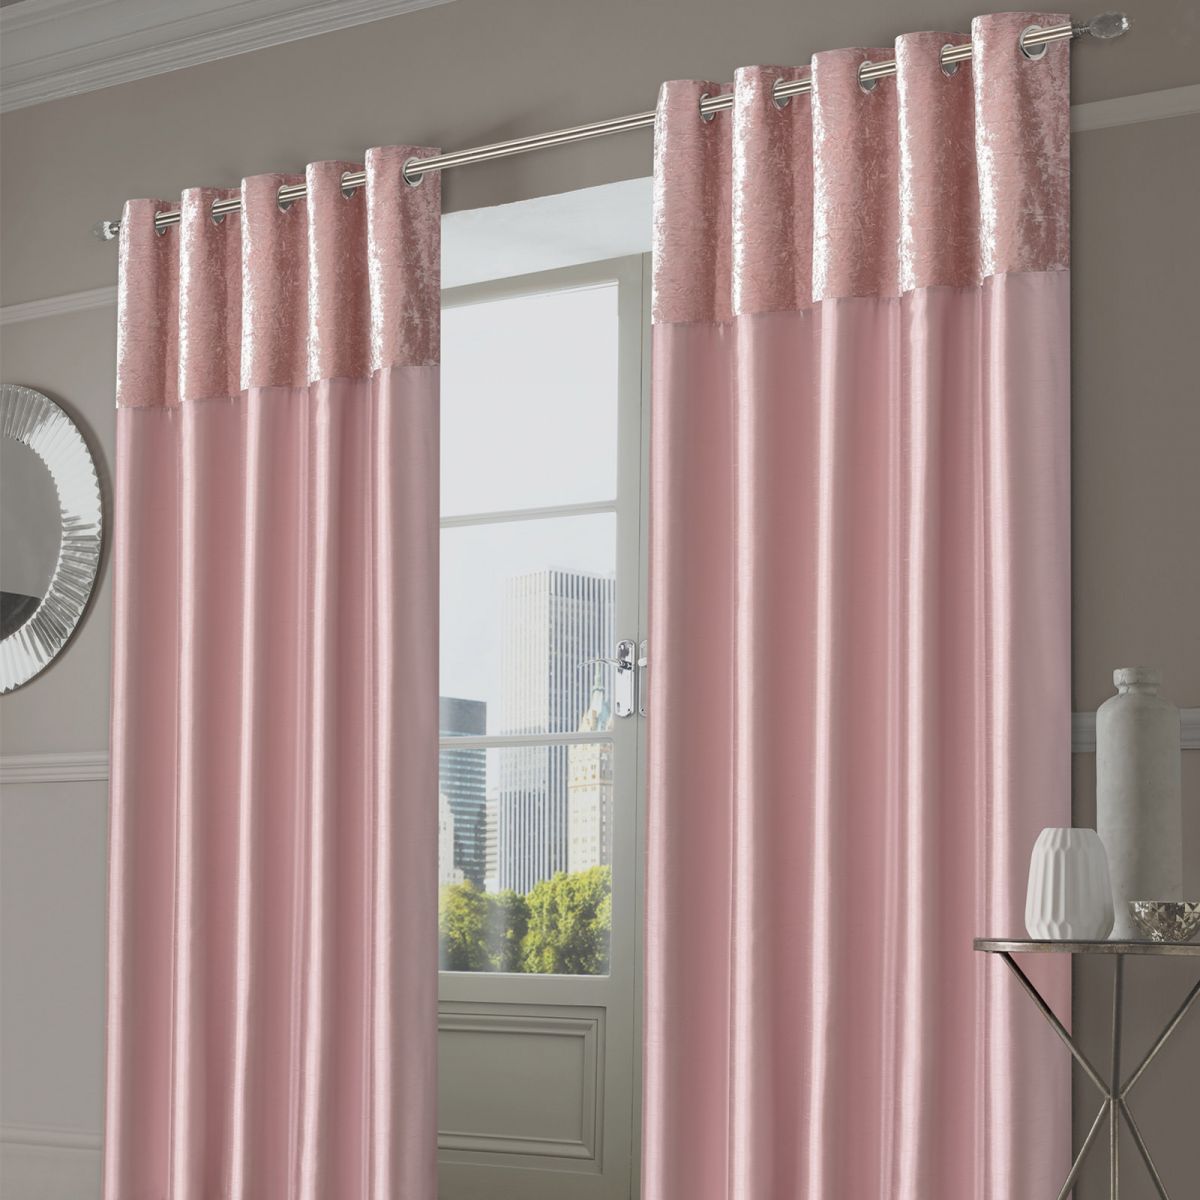 Sienna Home Manhattan Crushed Velvet Band Eyelet Curtains - Blush Pink, 46" x 90"